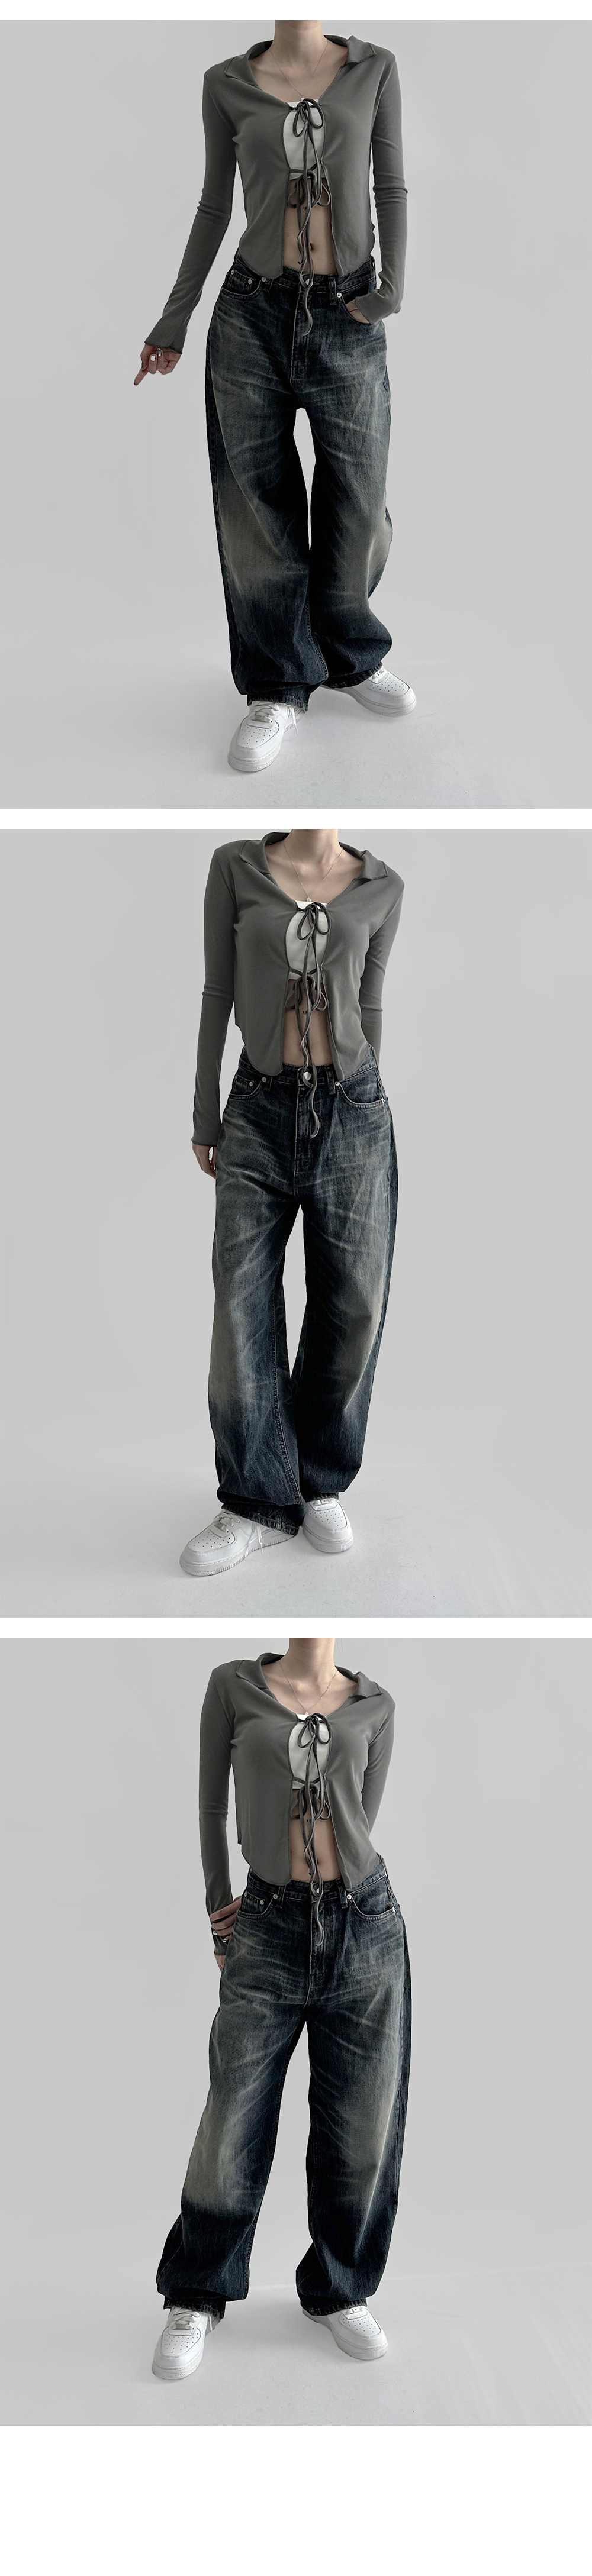 suspenders skirt/pants charcoal color image-S2L2